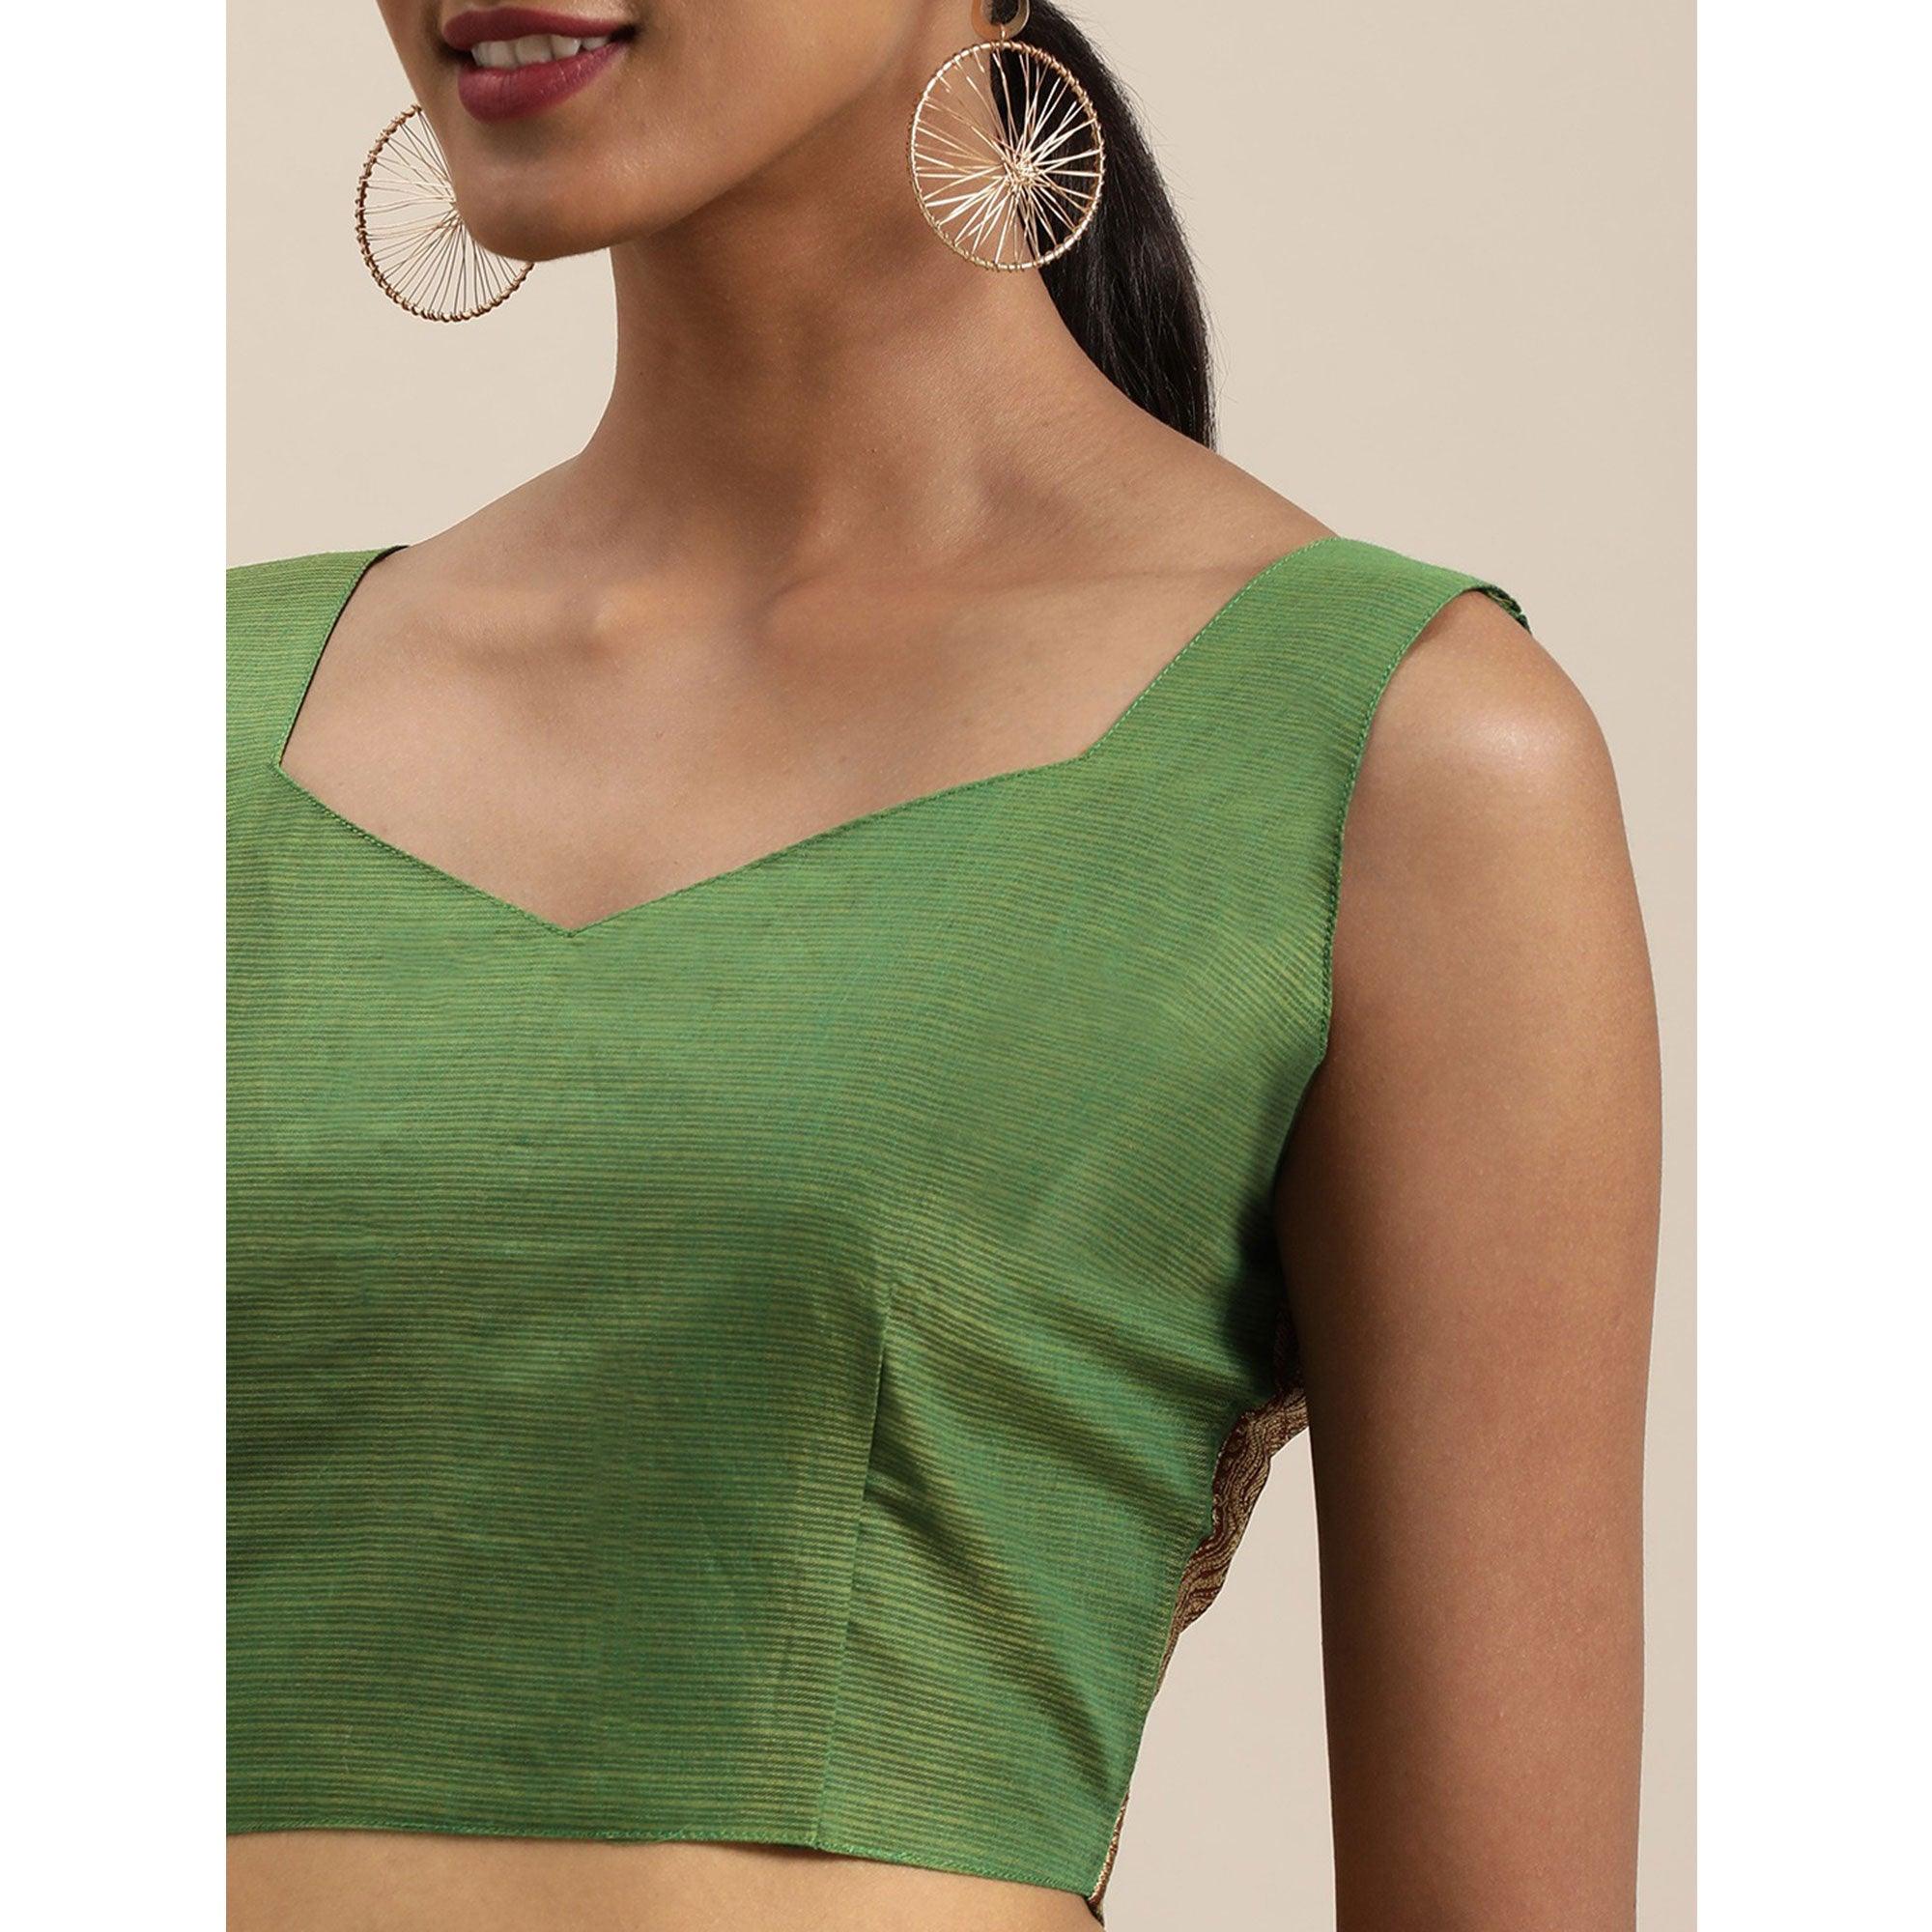 Green Festive Wear Woven Silk Saree With Jacquard Border - Peachmode